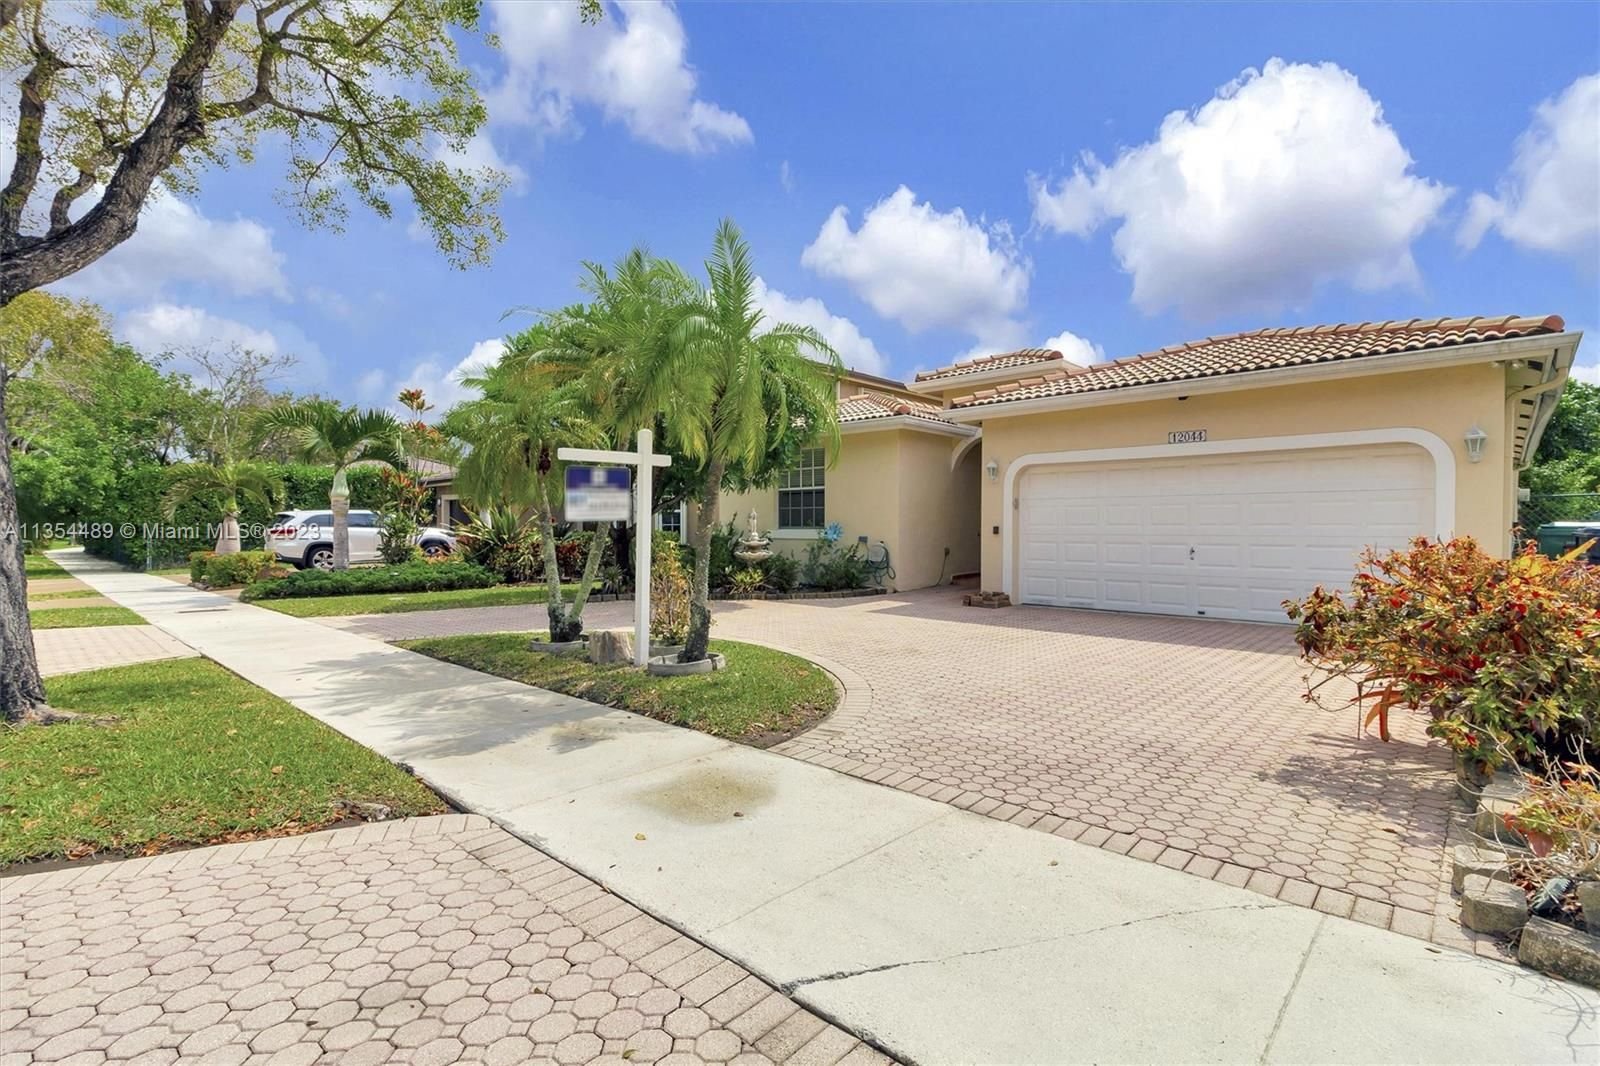 Real estate property located at 12044 125th St, Miami-Dade County, Miami, FL